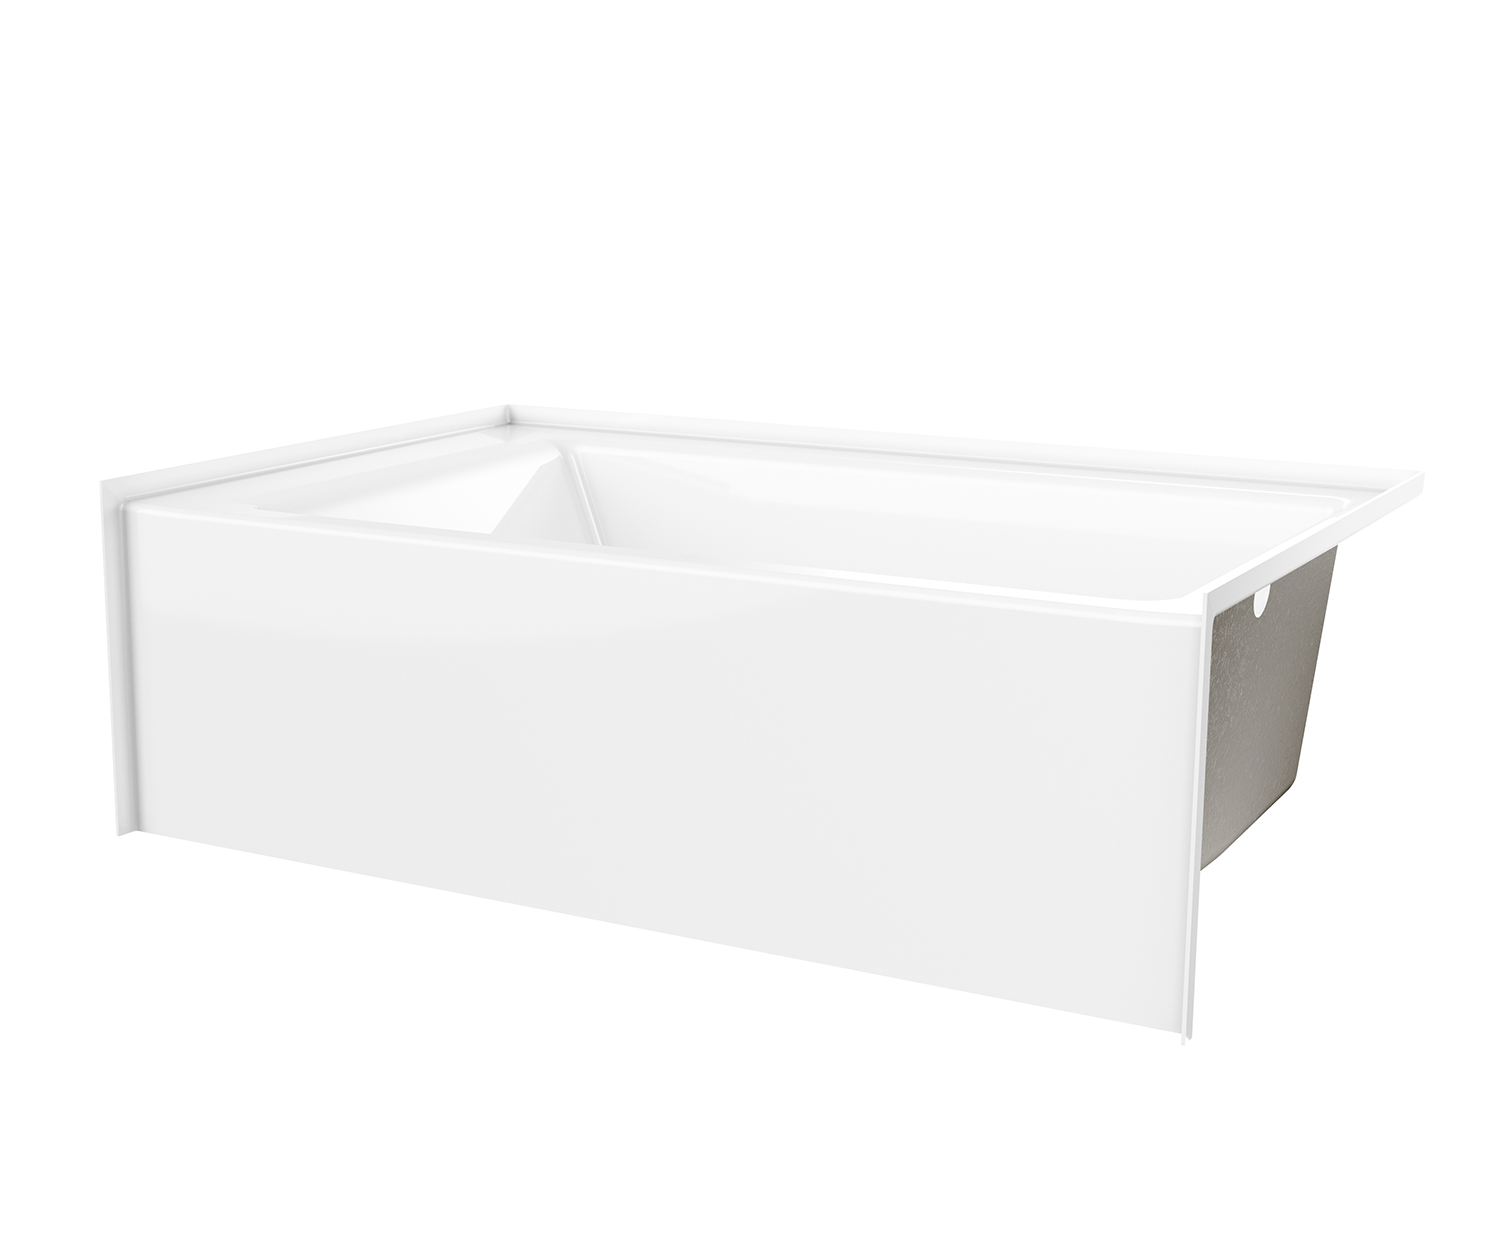 SMIN-3660 AcrylX Alcove Left-Hand Drain Bath in White | Bath, Aker en